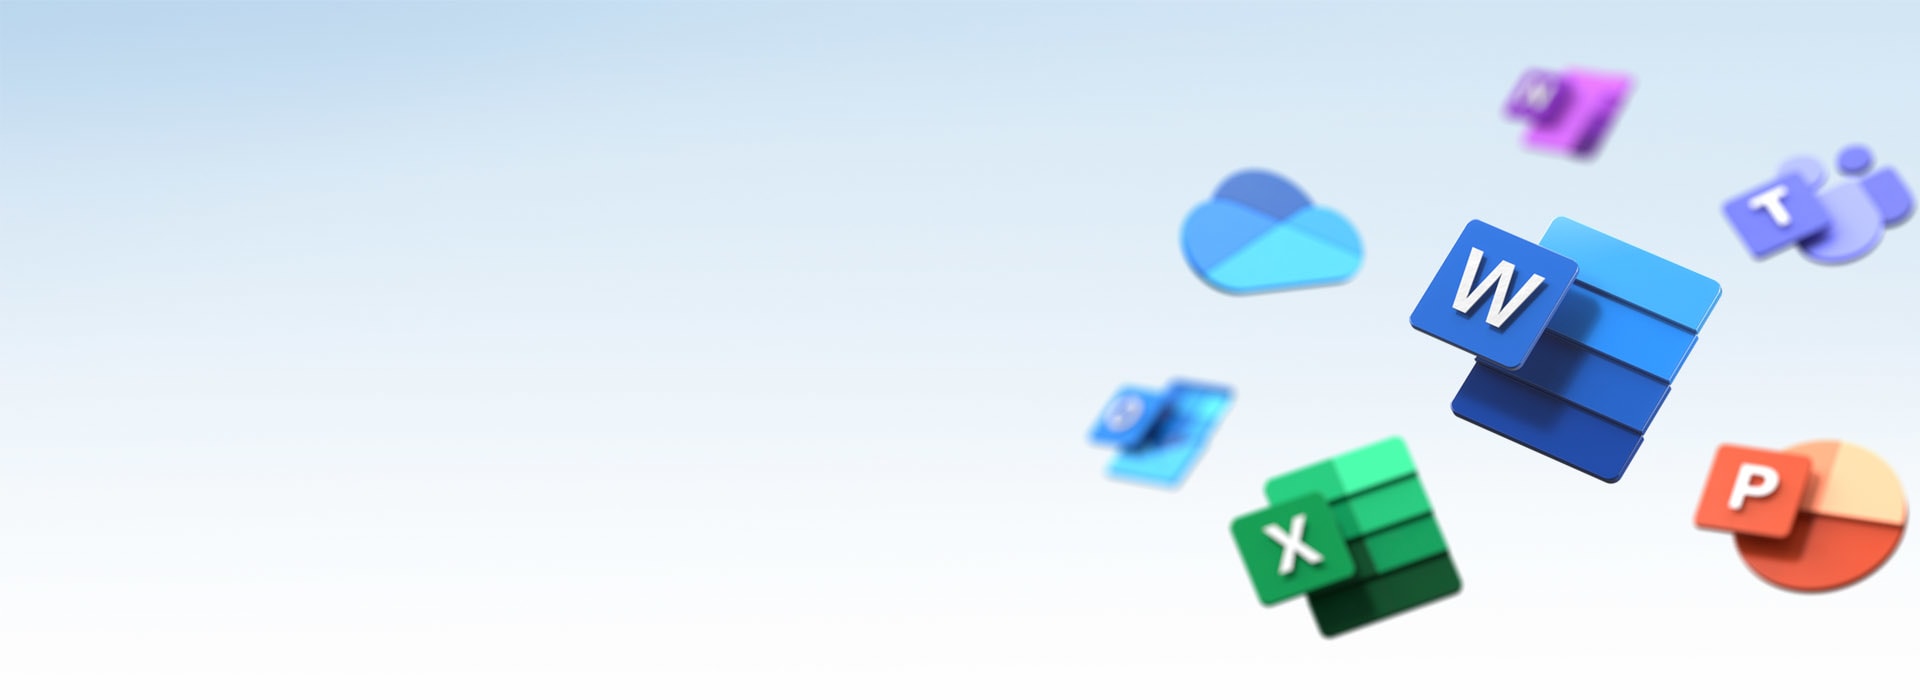 Microsoft Office Logos on Blue Background